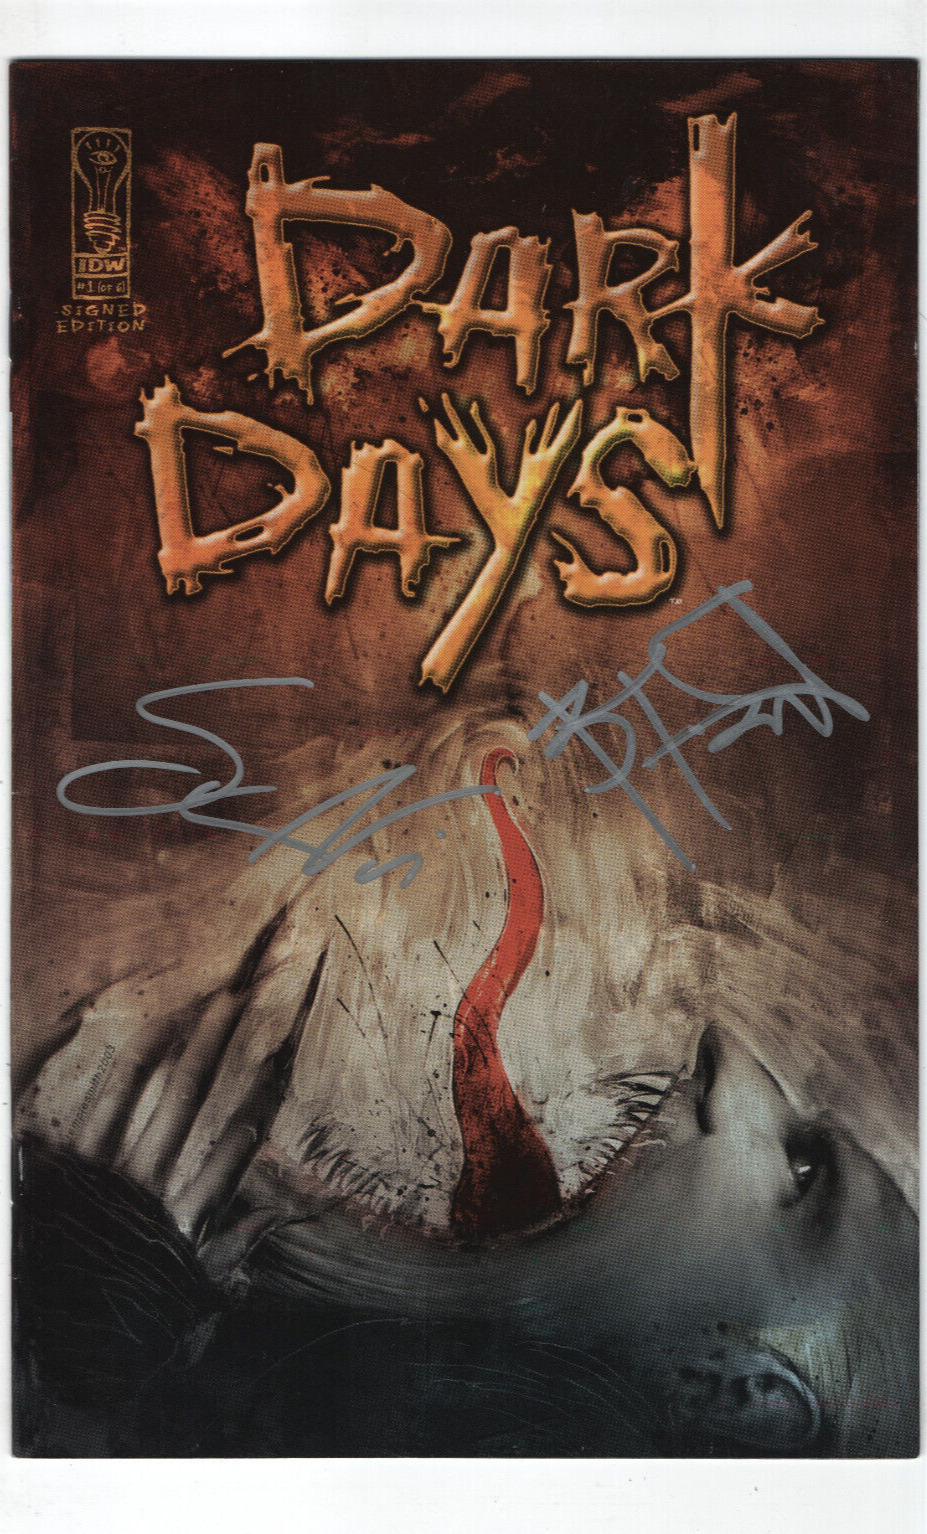 30 Days of Night Dark Days #1 Signed Variant Steve Niles Templesmith IDW Horror